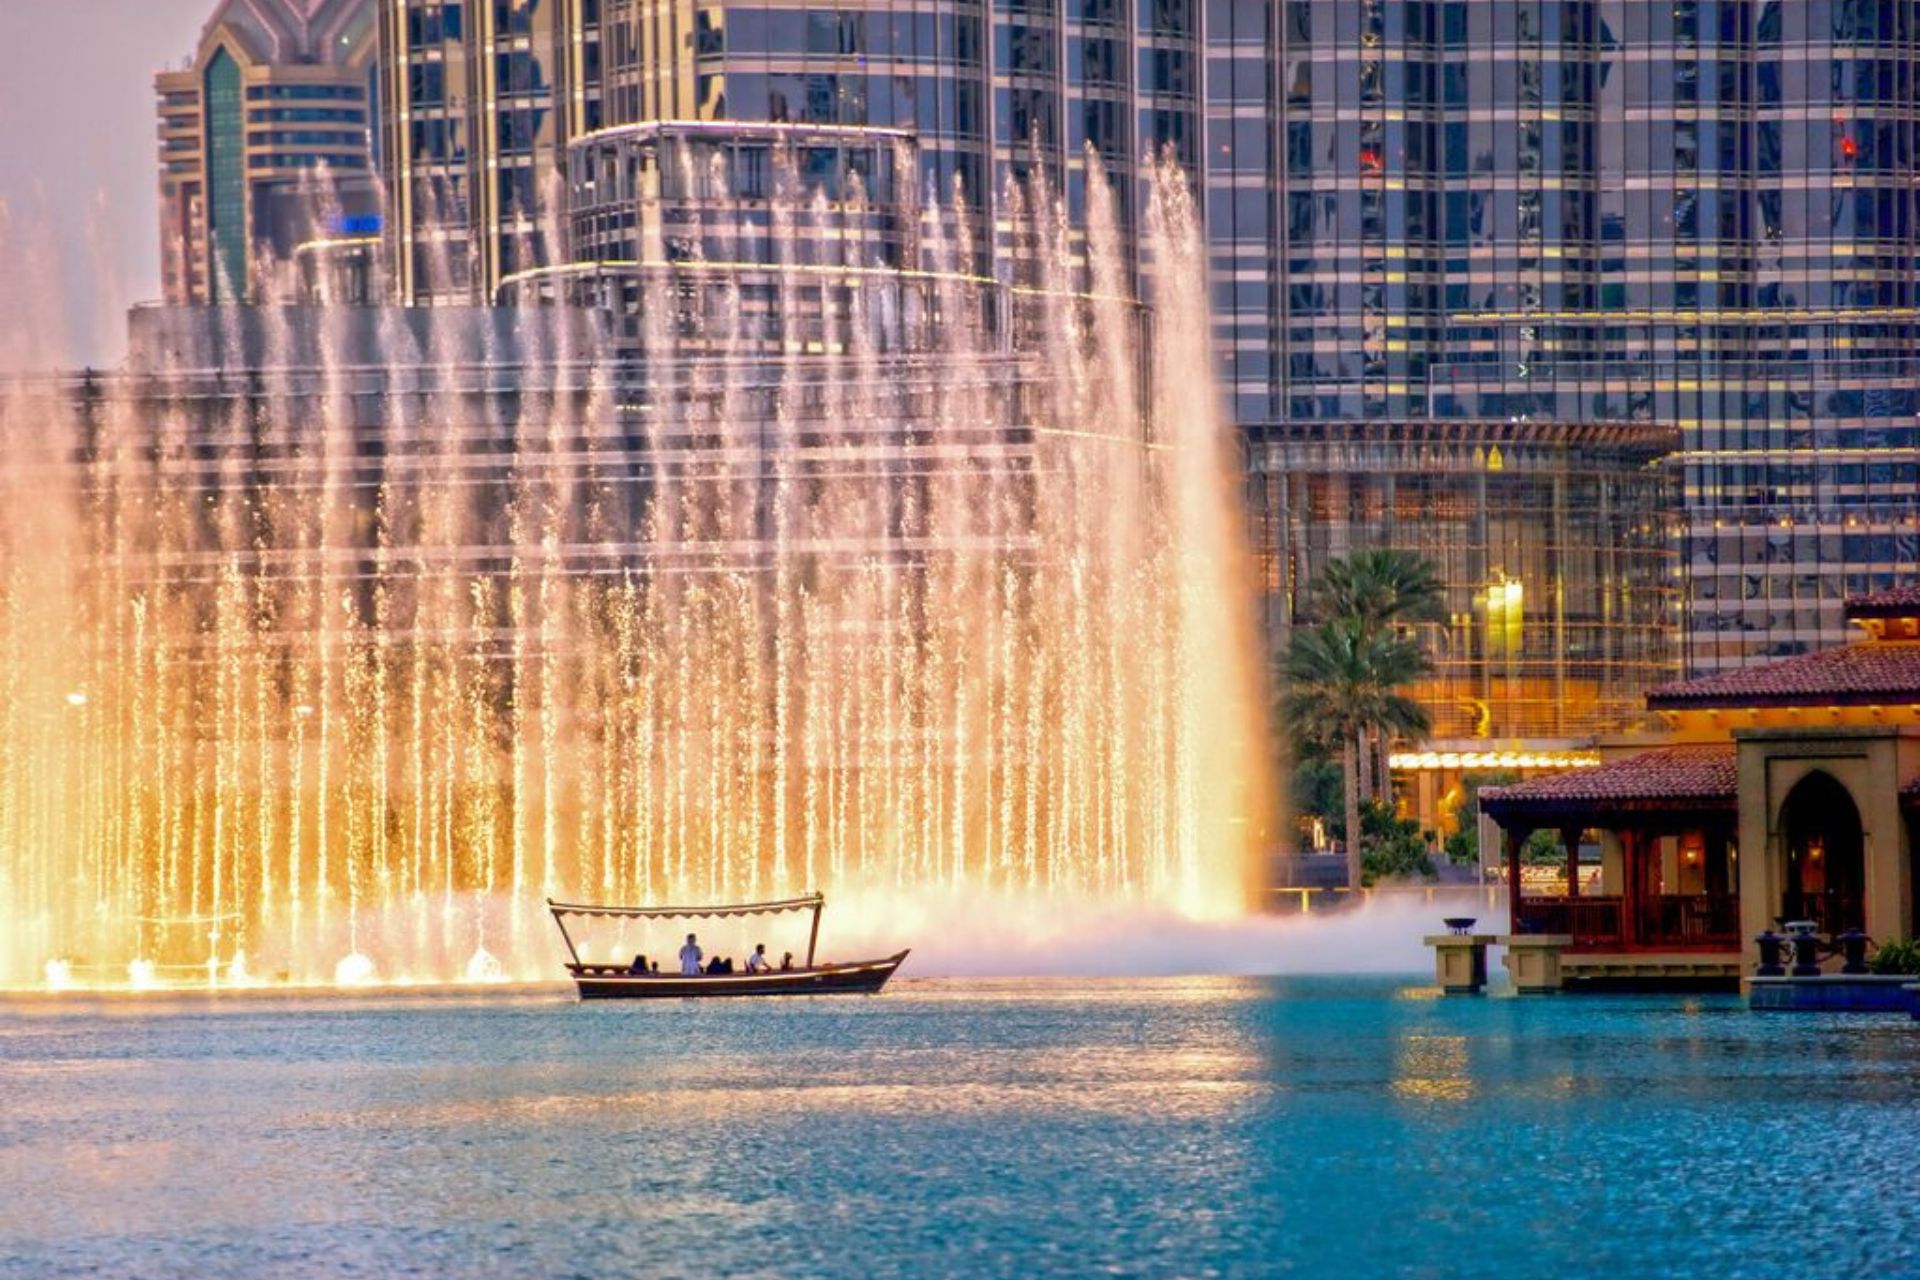 The Dubai Fountain ©DubaiTourism